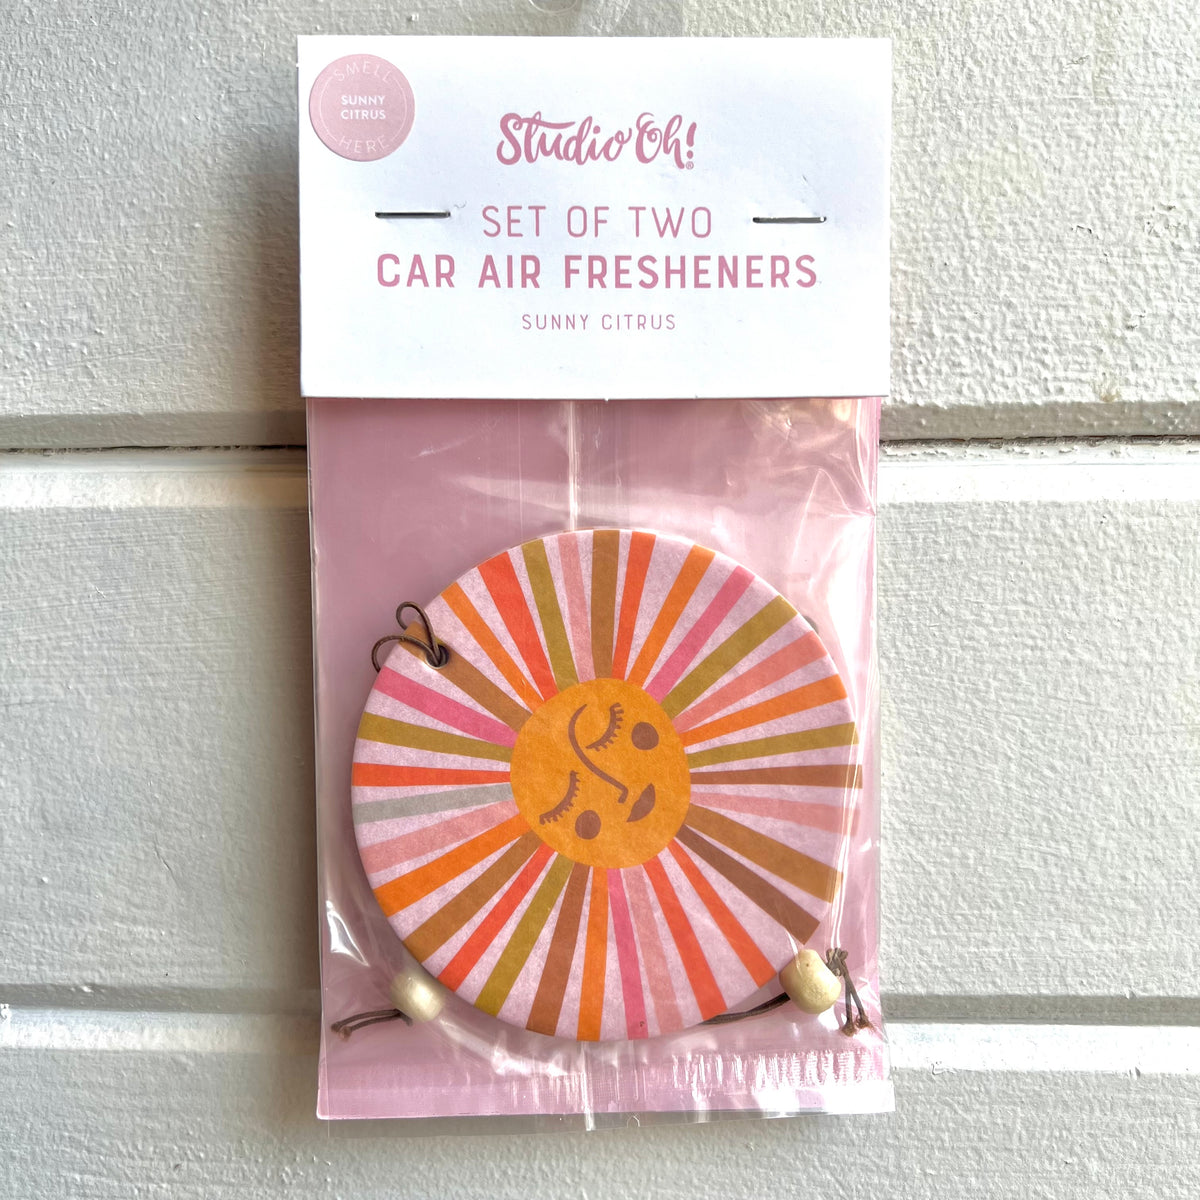 Car freshener – Oh That Vibe